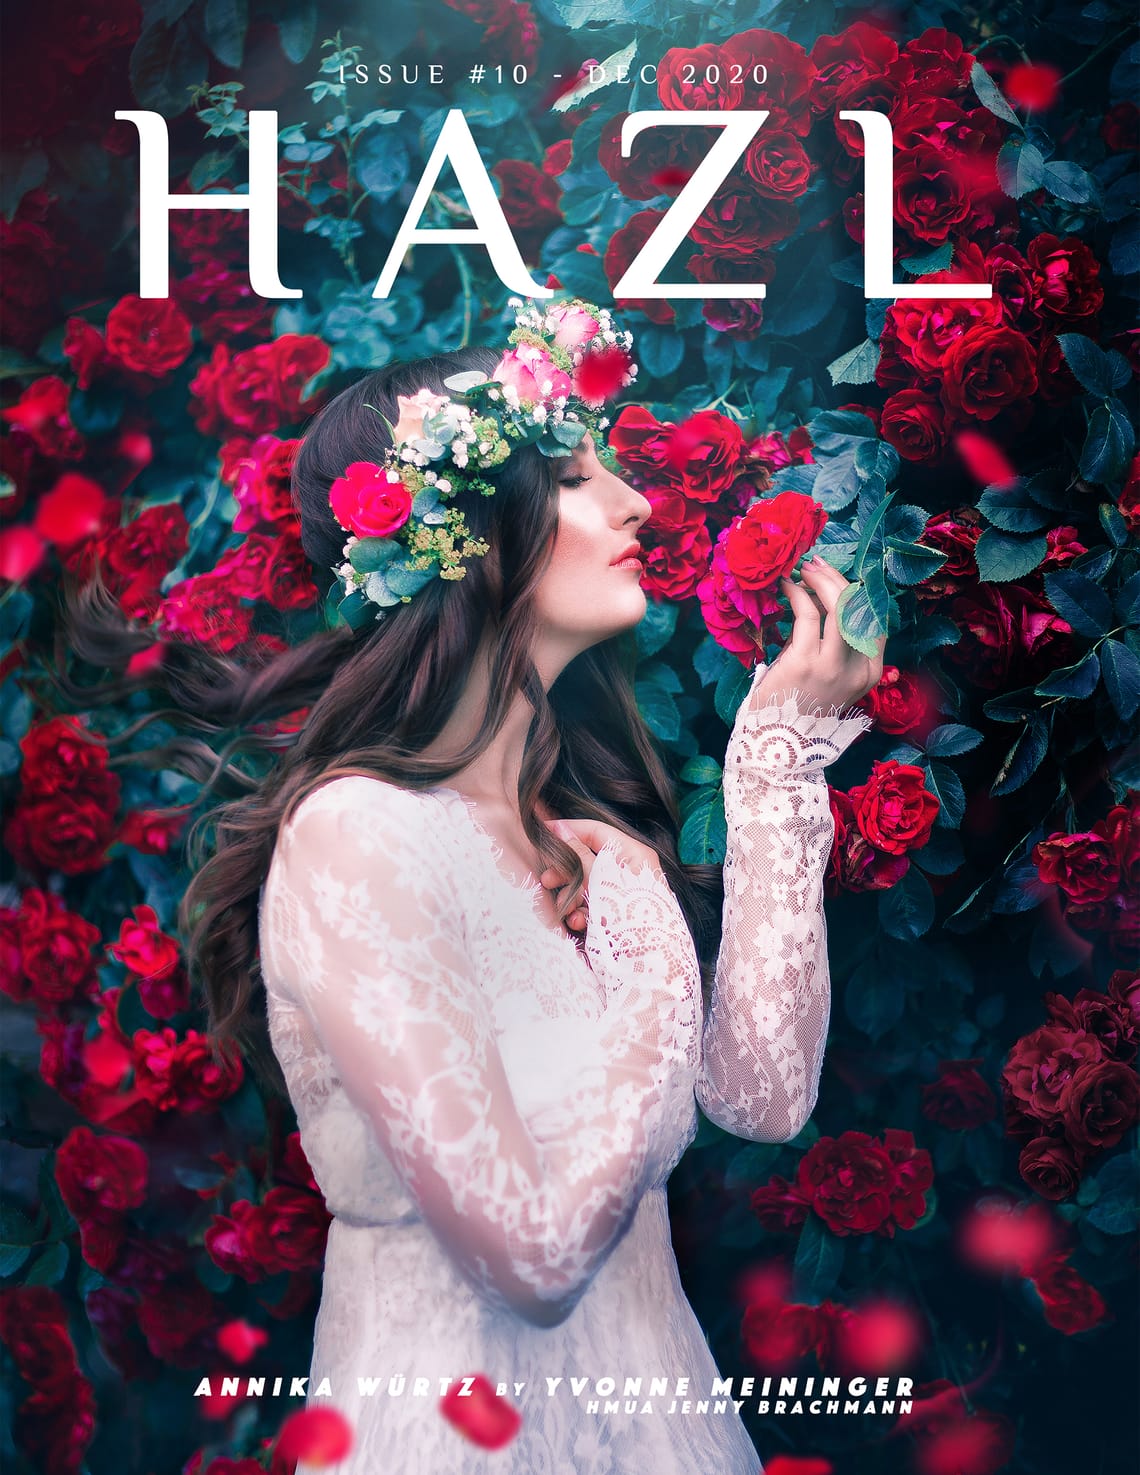 HAZL Magazine Issue #10 -  December 2020 Launched Worldwide